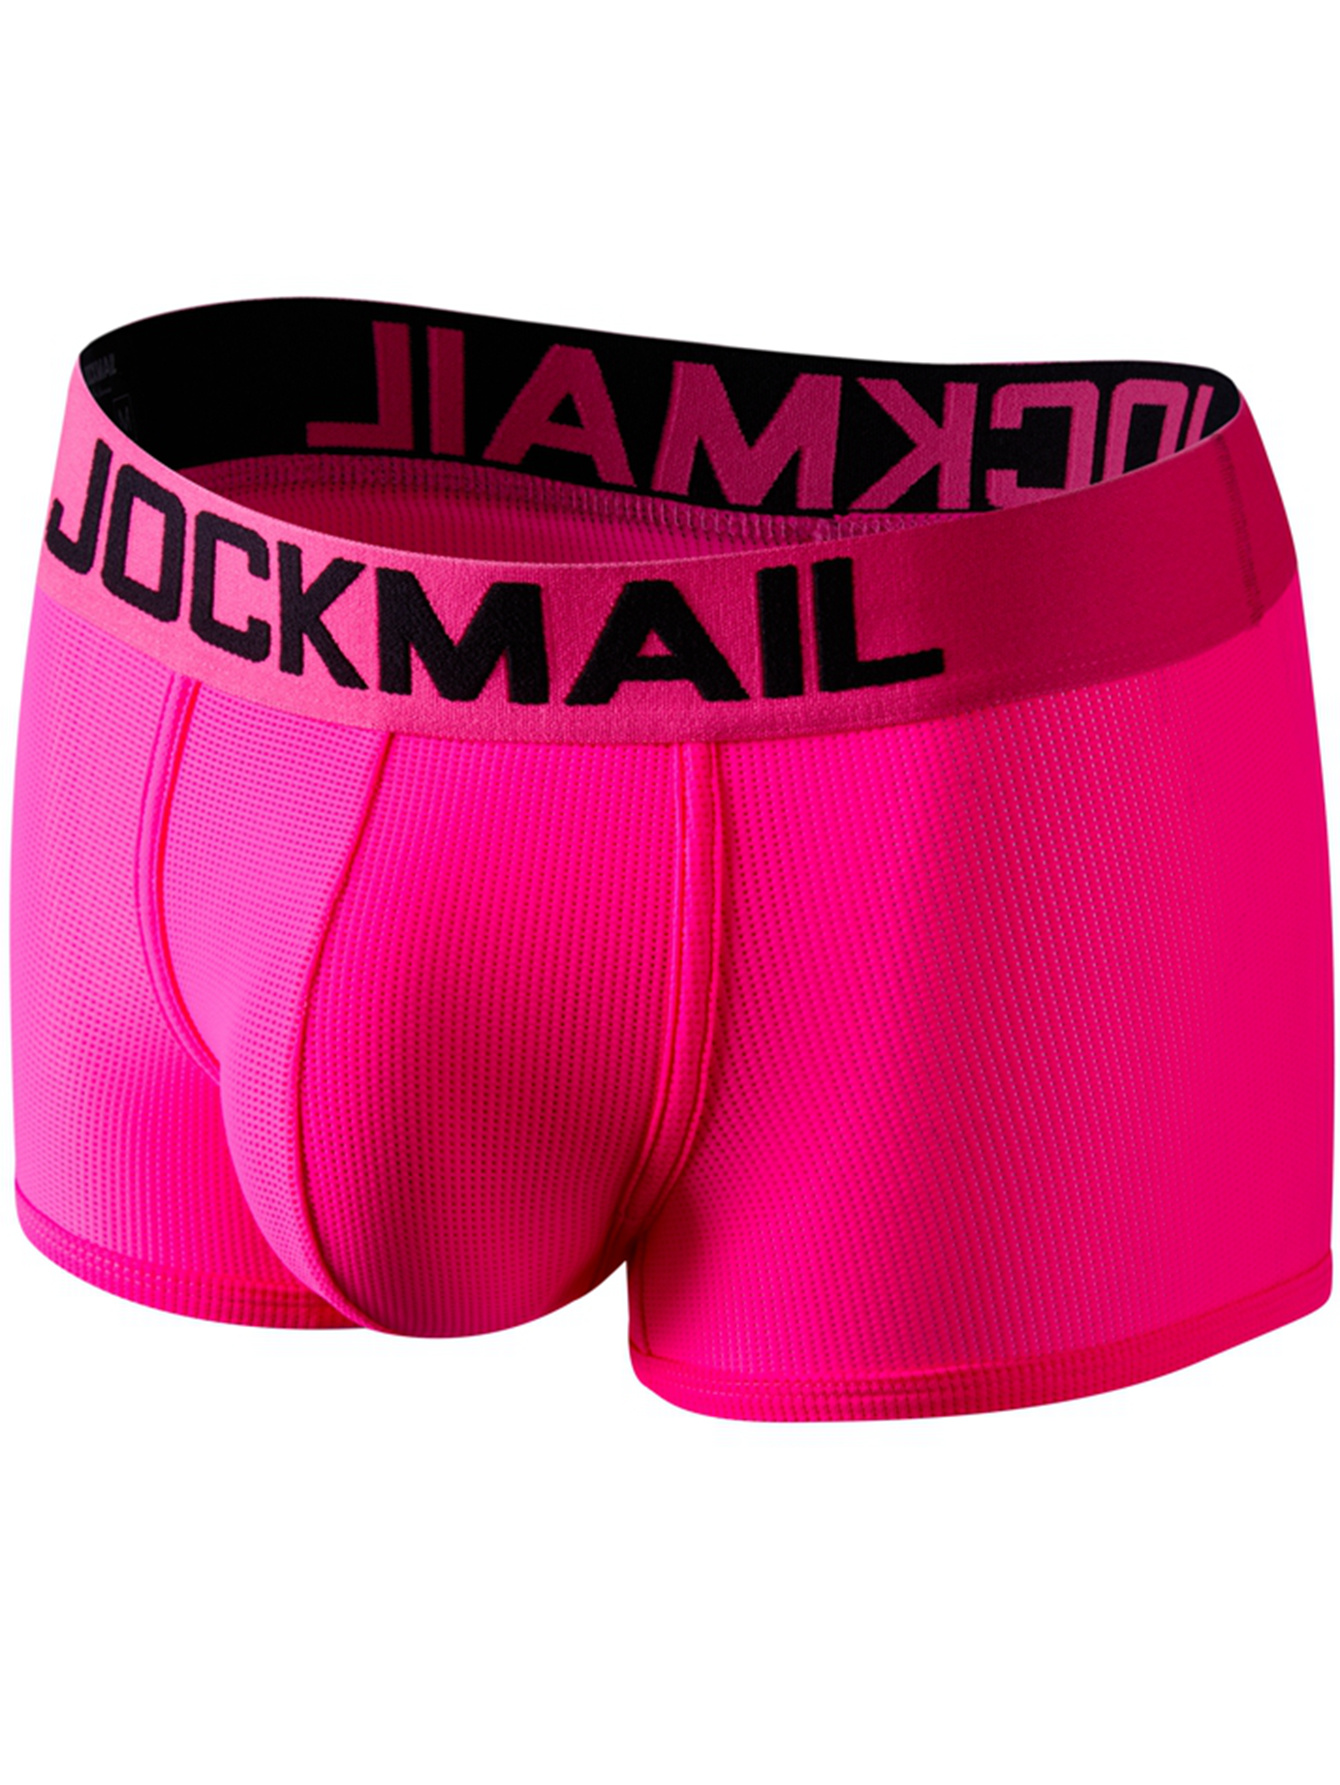 JOCKMAIL Mens Silky Fine Bulge Enhancing Micro Boxer Brief Underwear Shorts